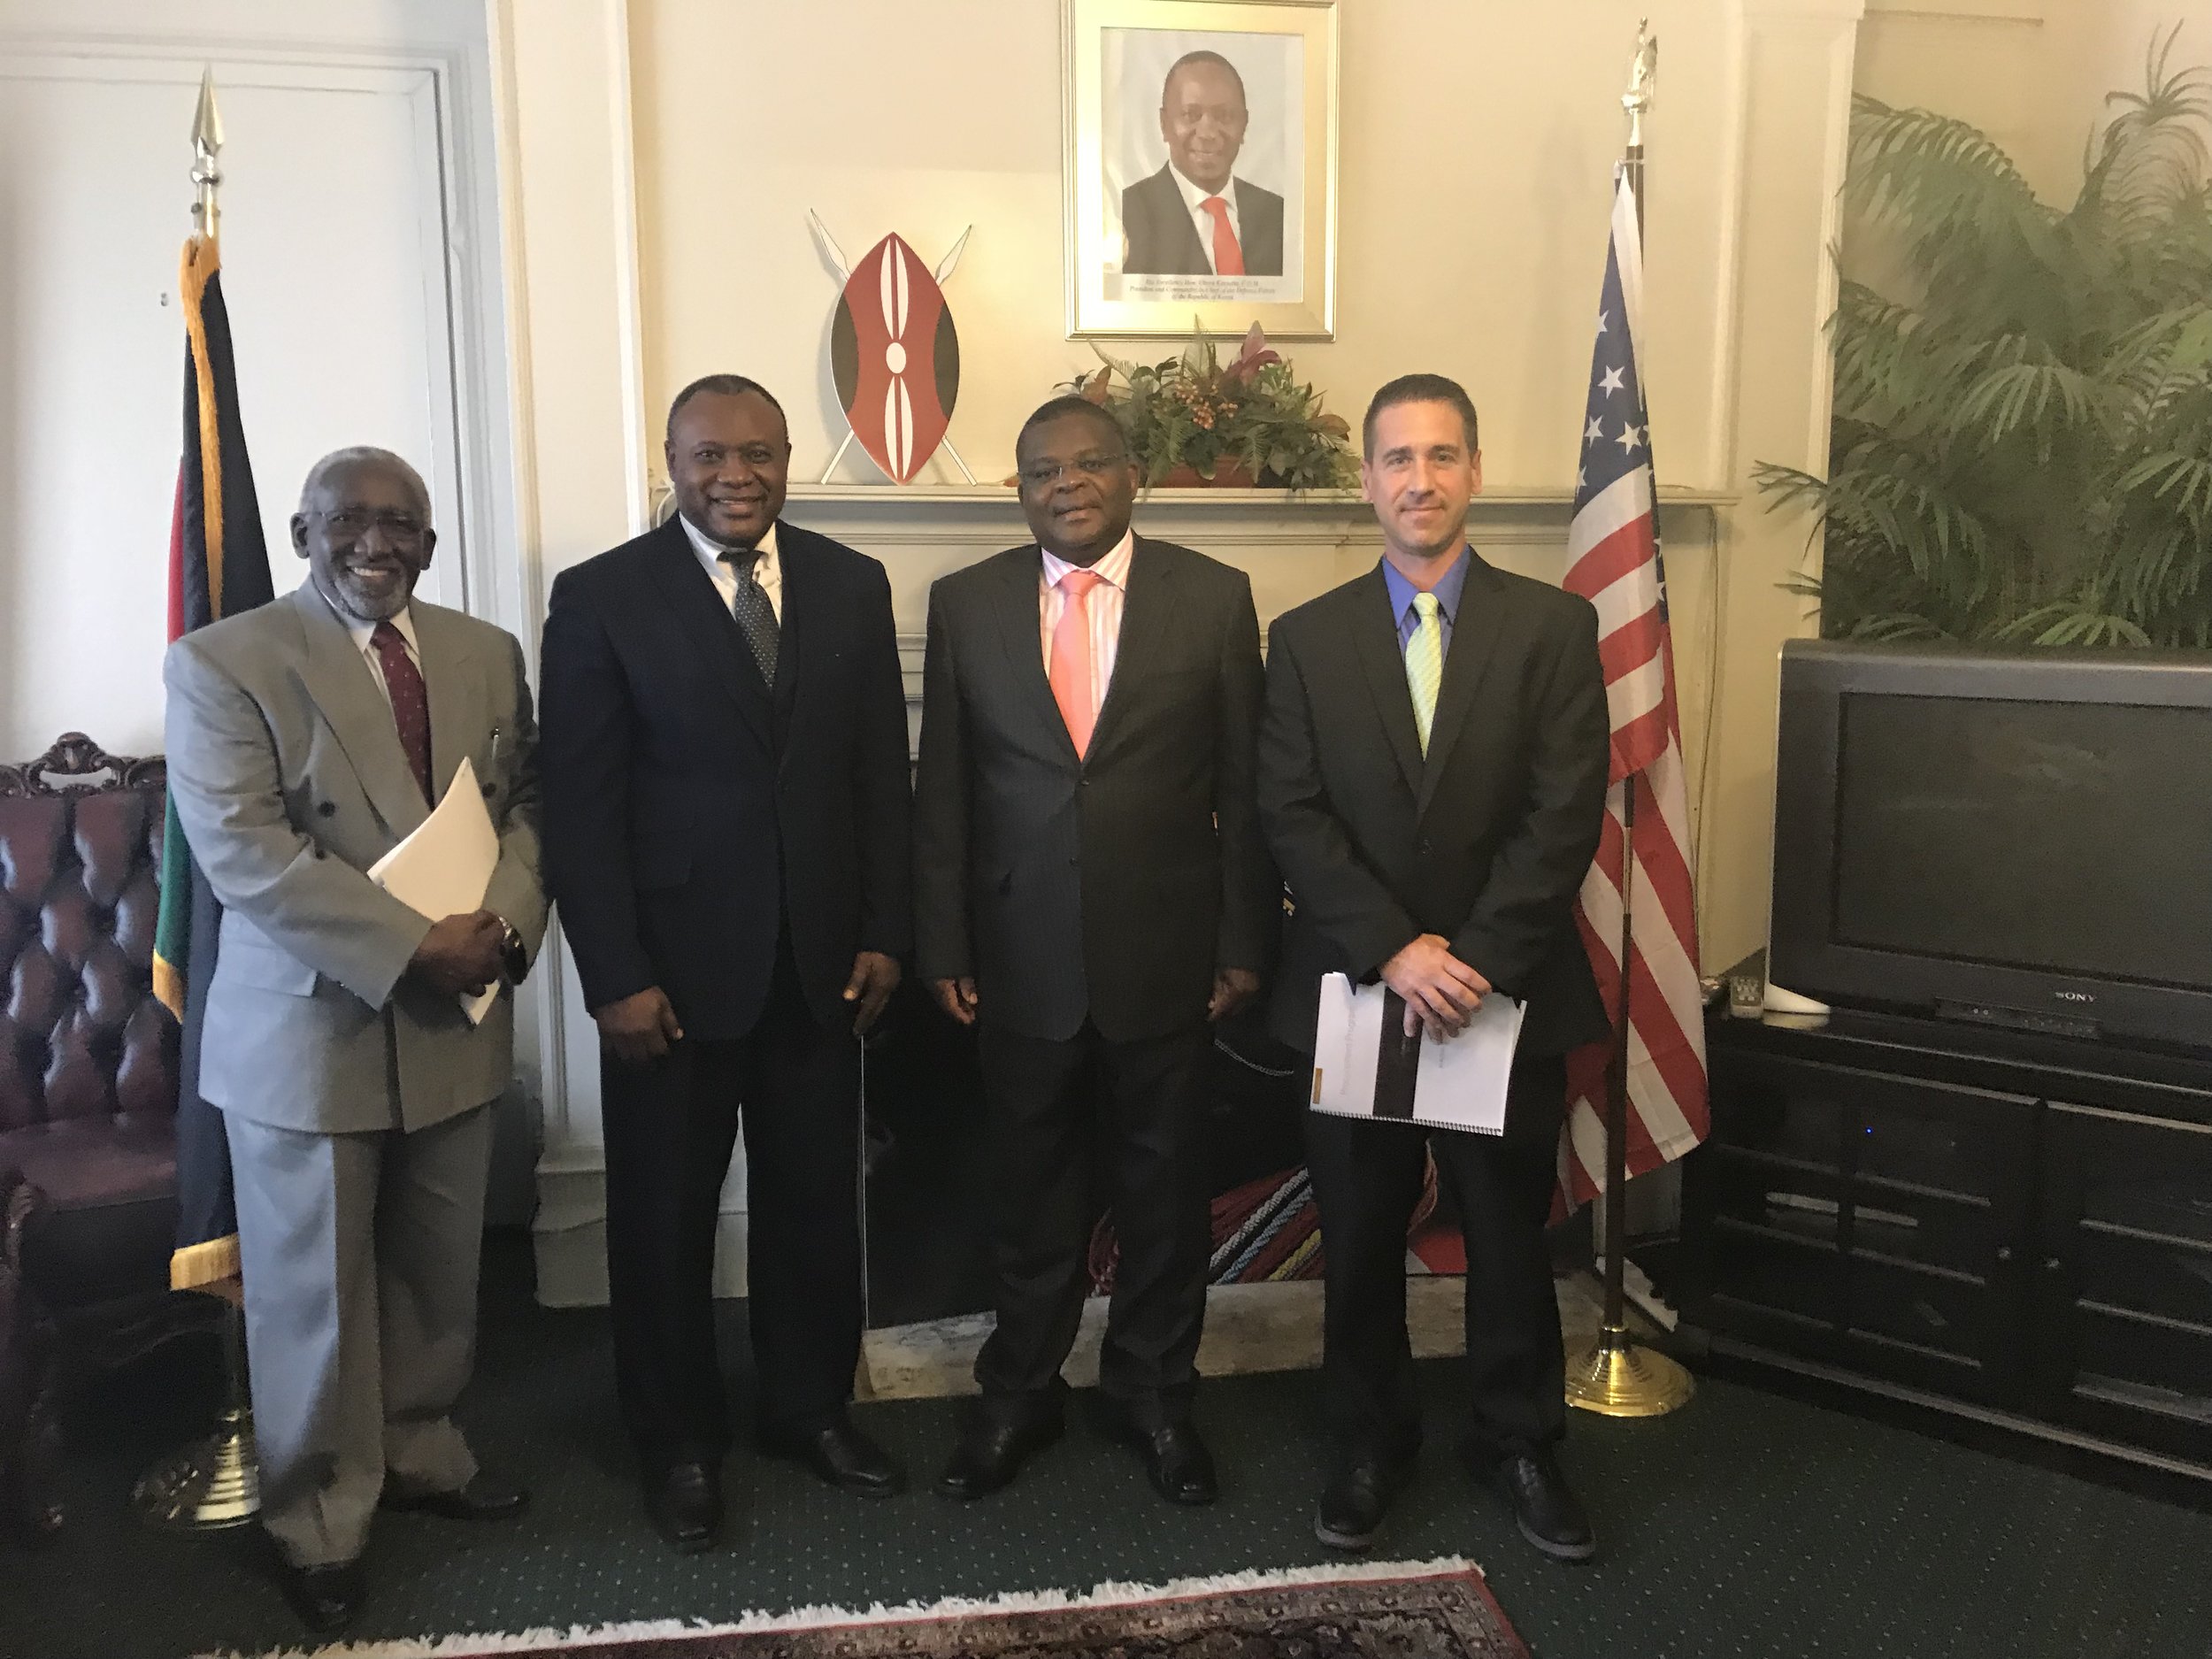 Dr. Gatabki, Thomas, His Excellency Robinson Githe, Ambassador to Kenya, and Brian